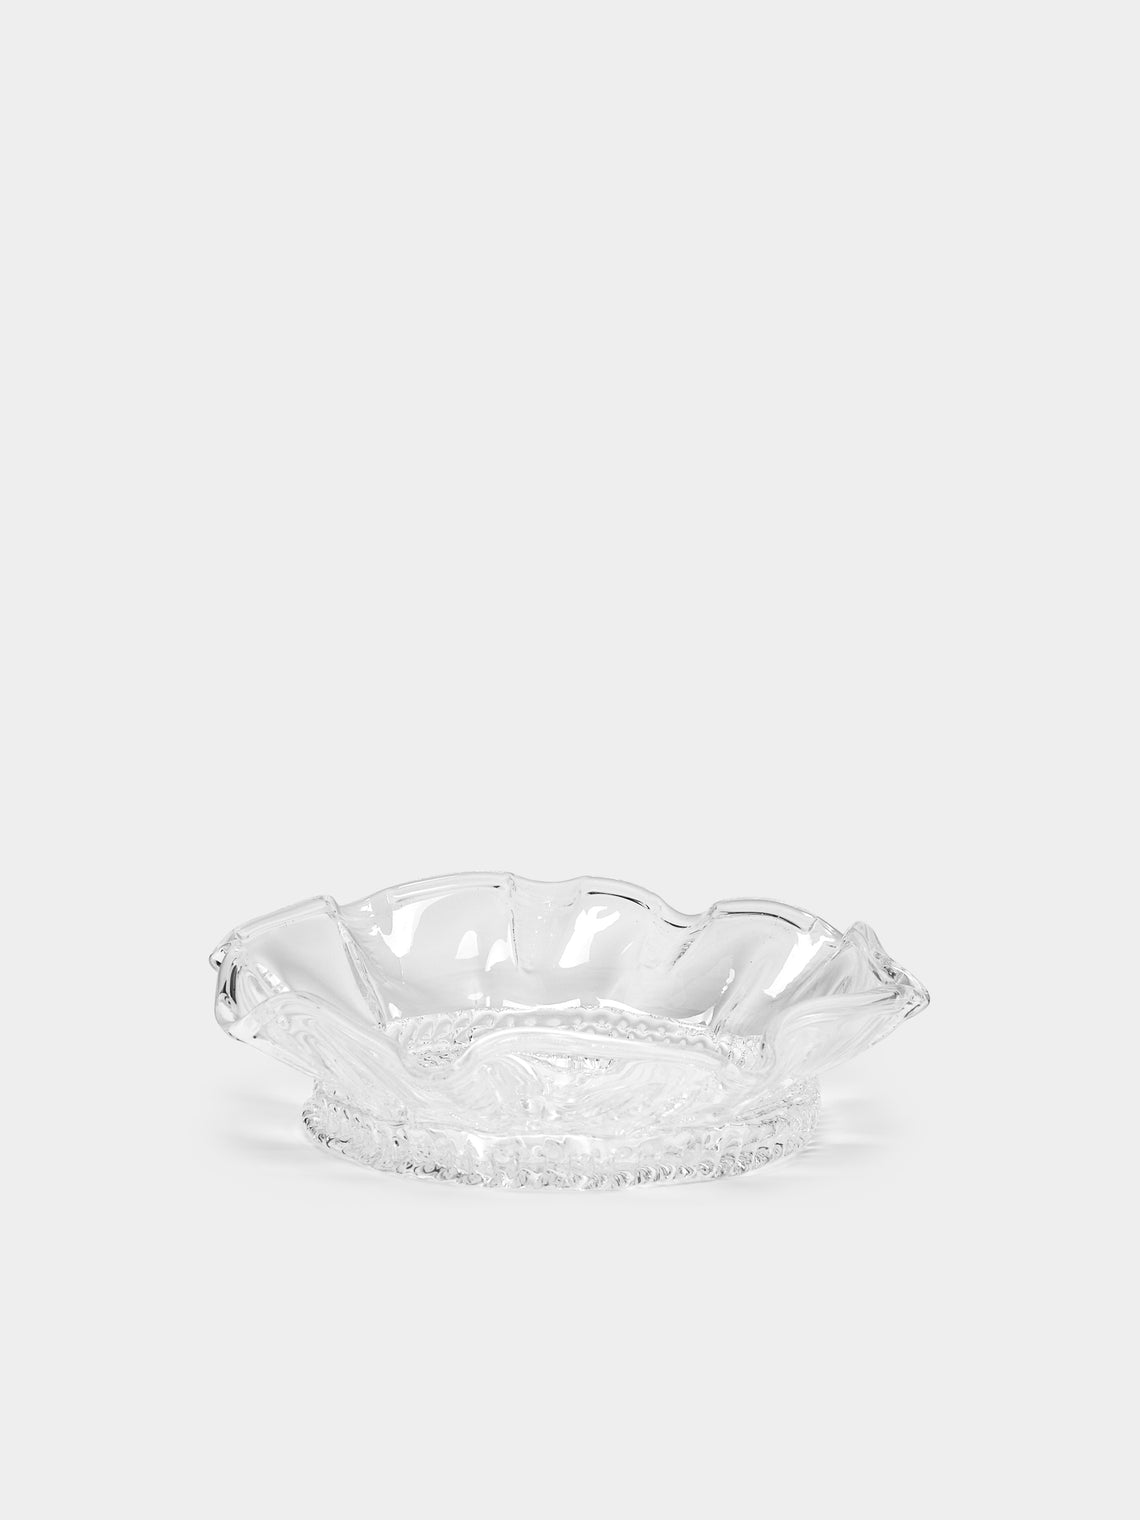 Alexander Kirkeby - Hand-Blown Crystal Dessert Bowl -  - ABASK - 